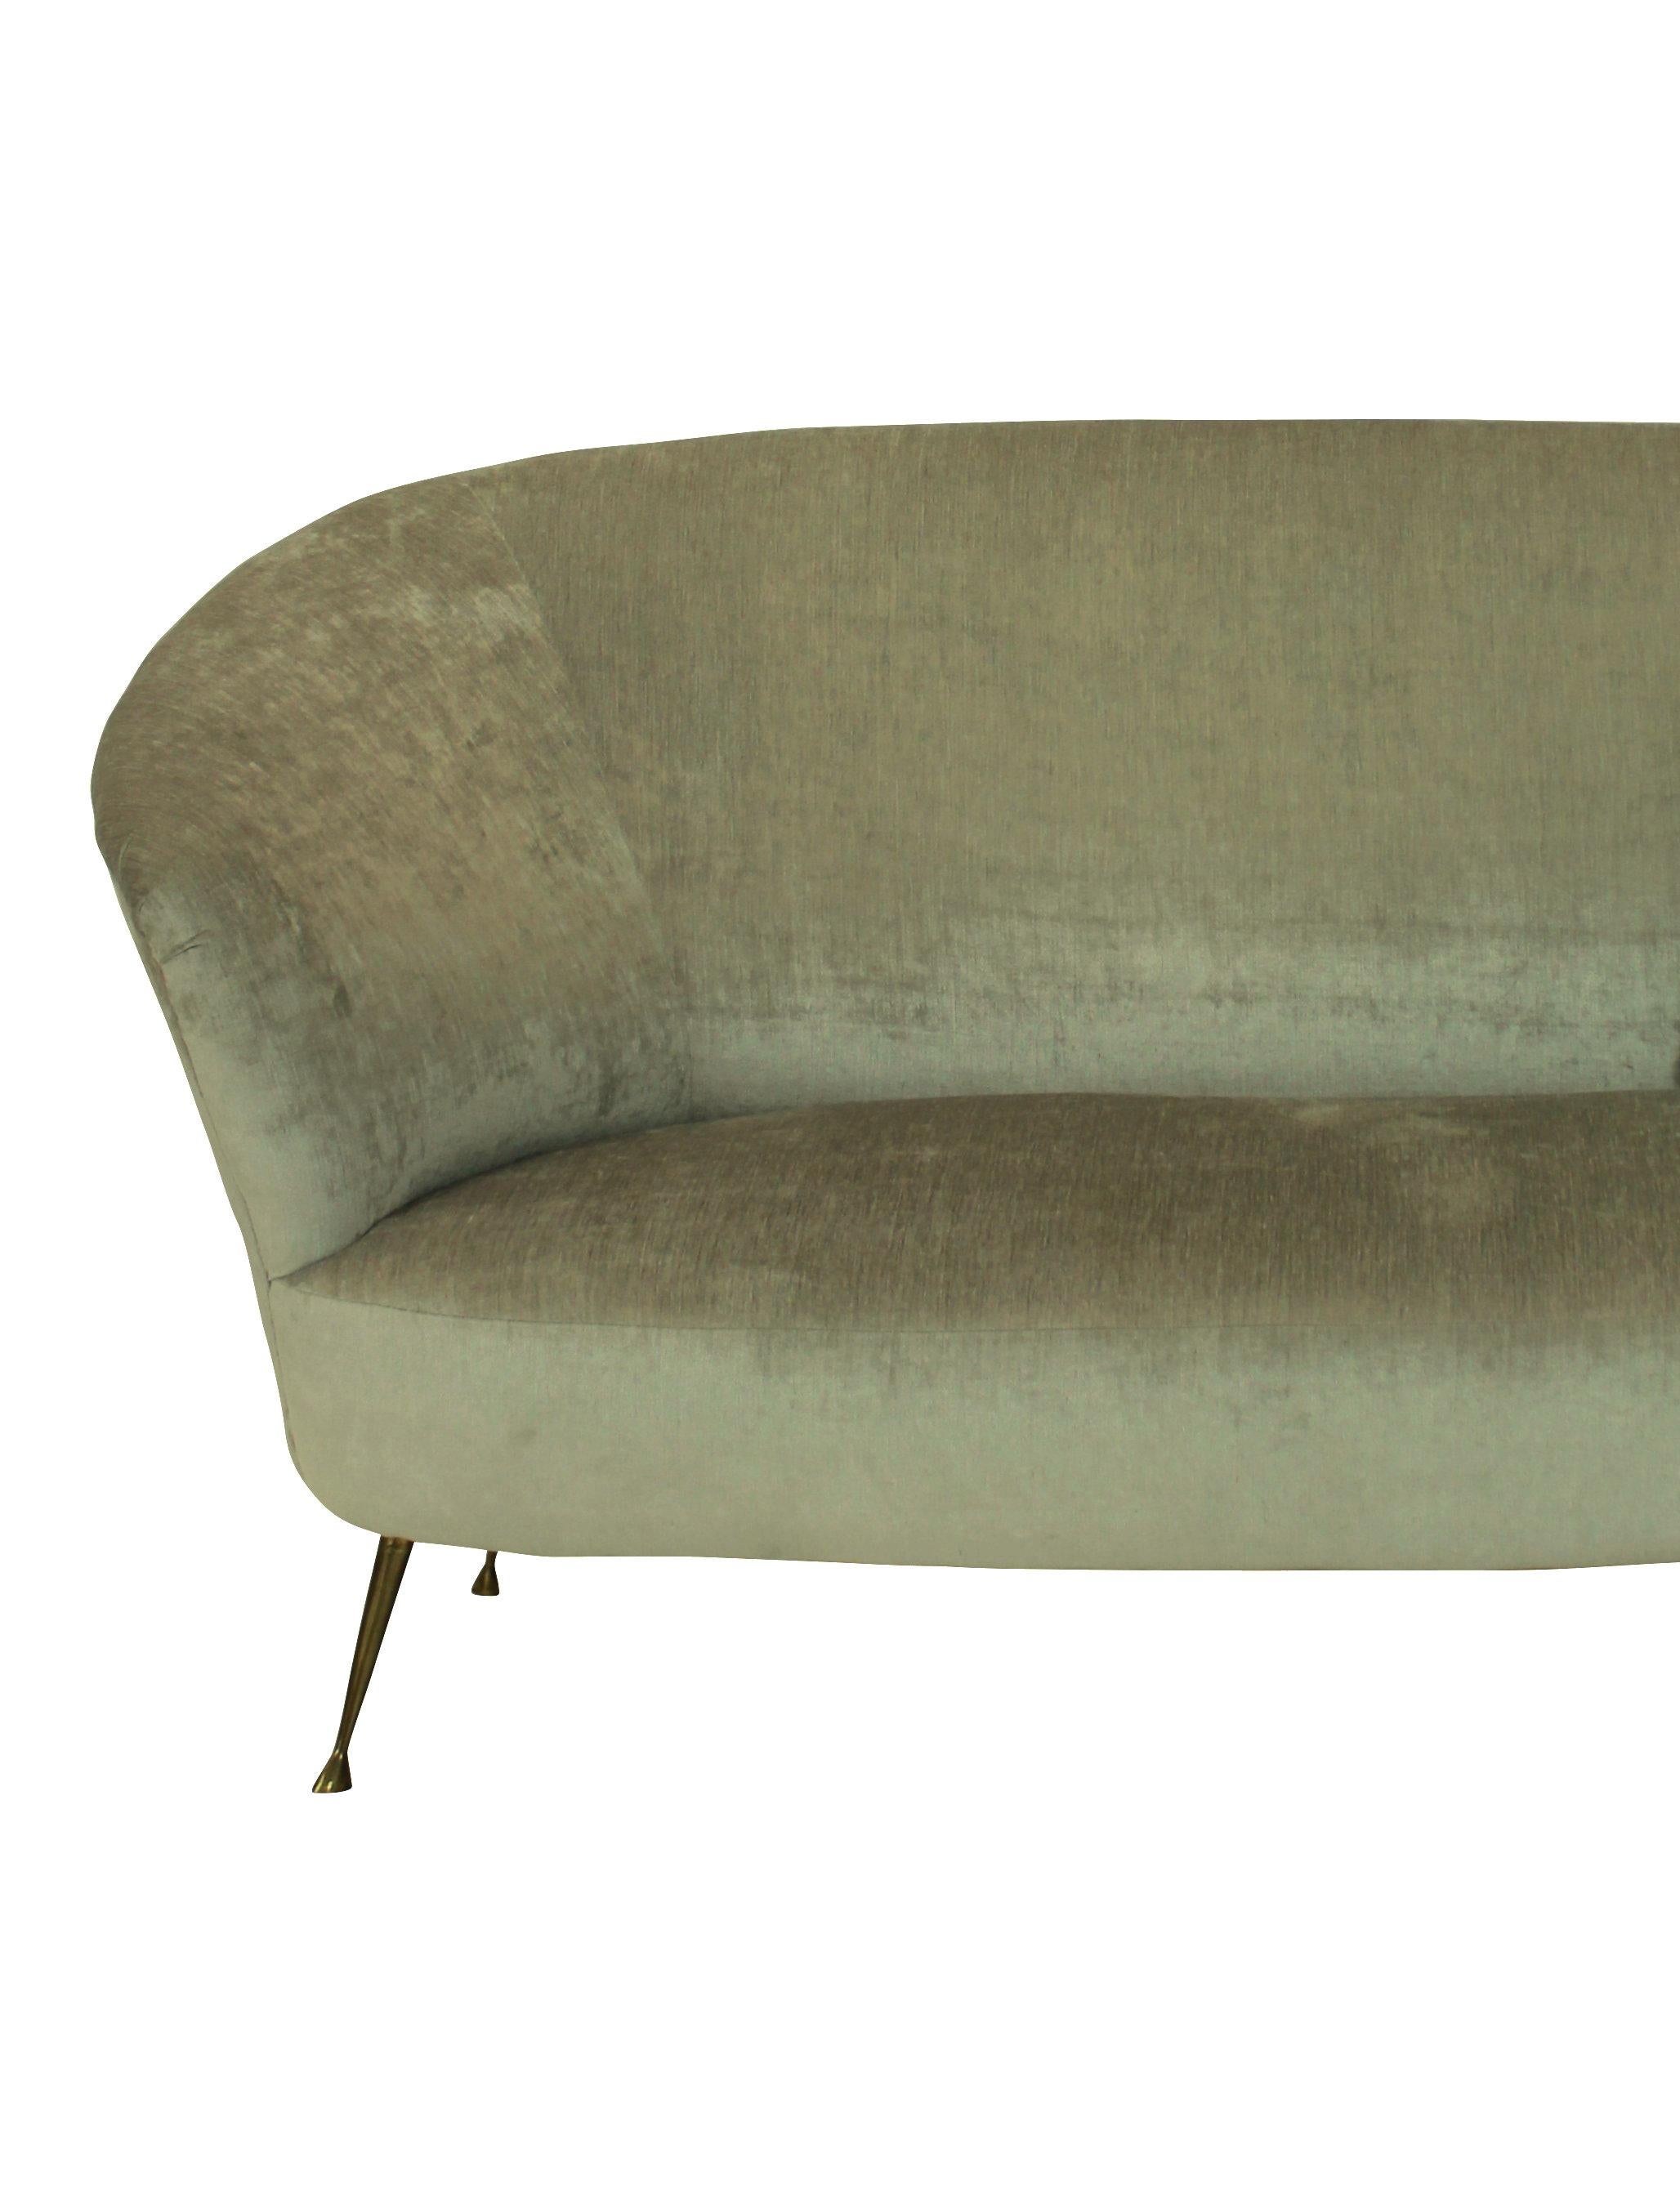 Mid-Century Modern Midcentury Curved Parisi Sofa on Brass Feet